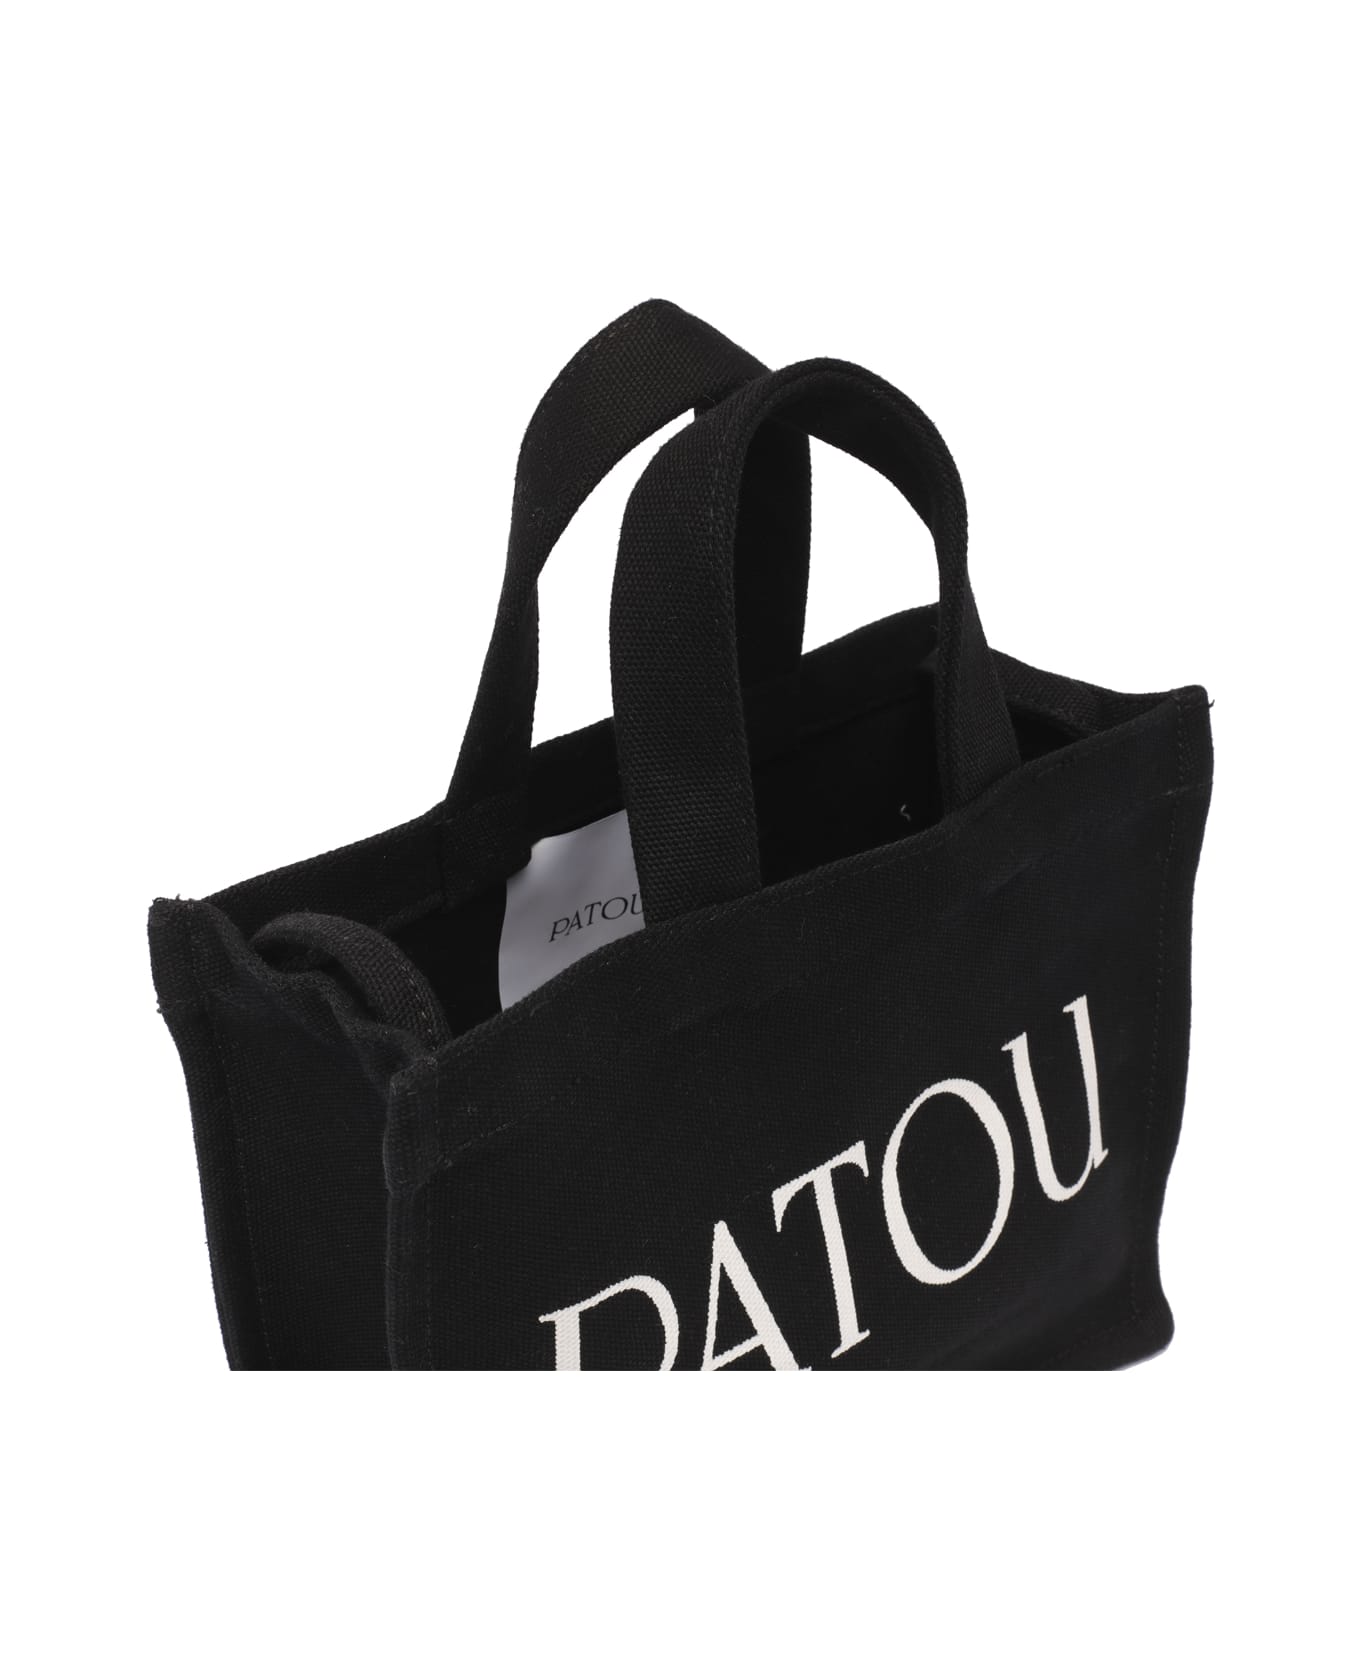 Patou Small Logo Tote Bag - Nero